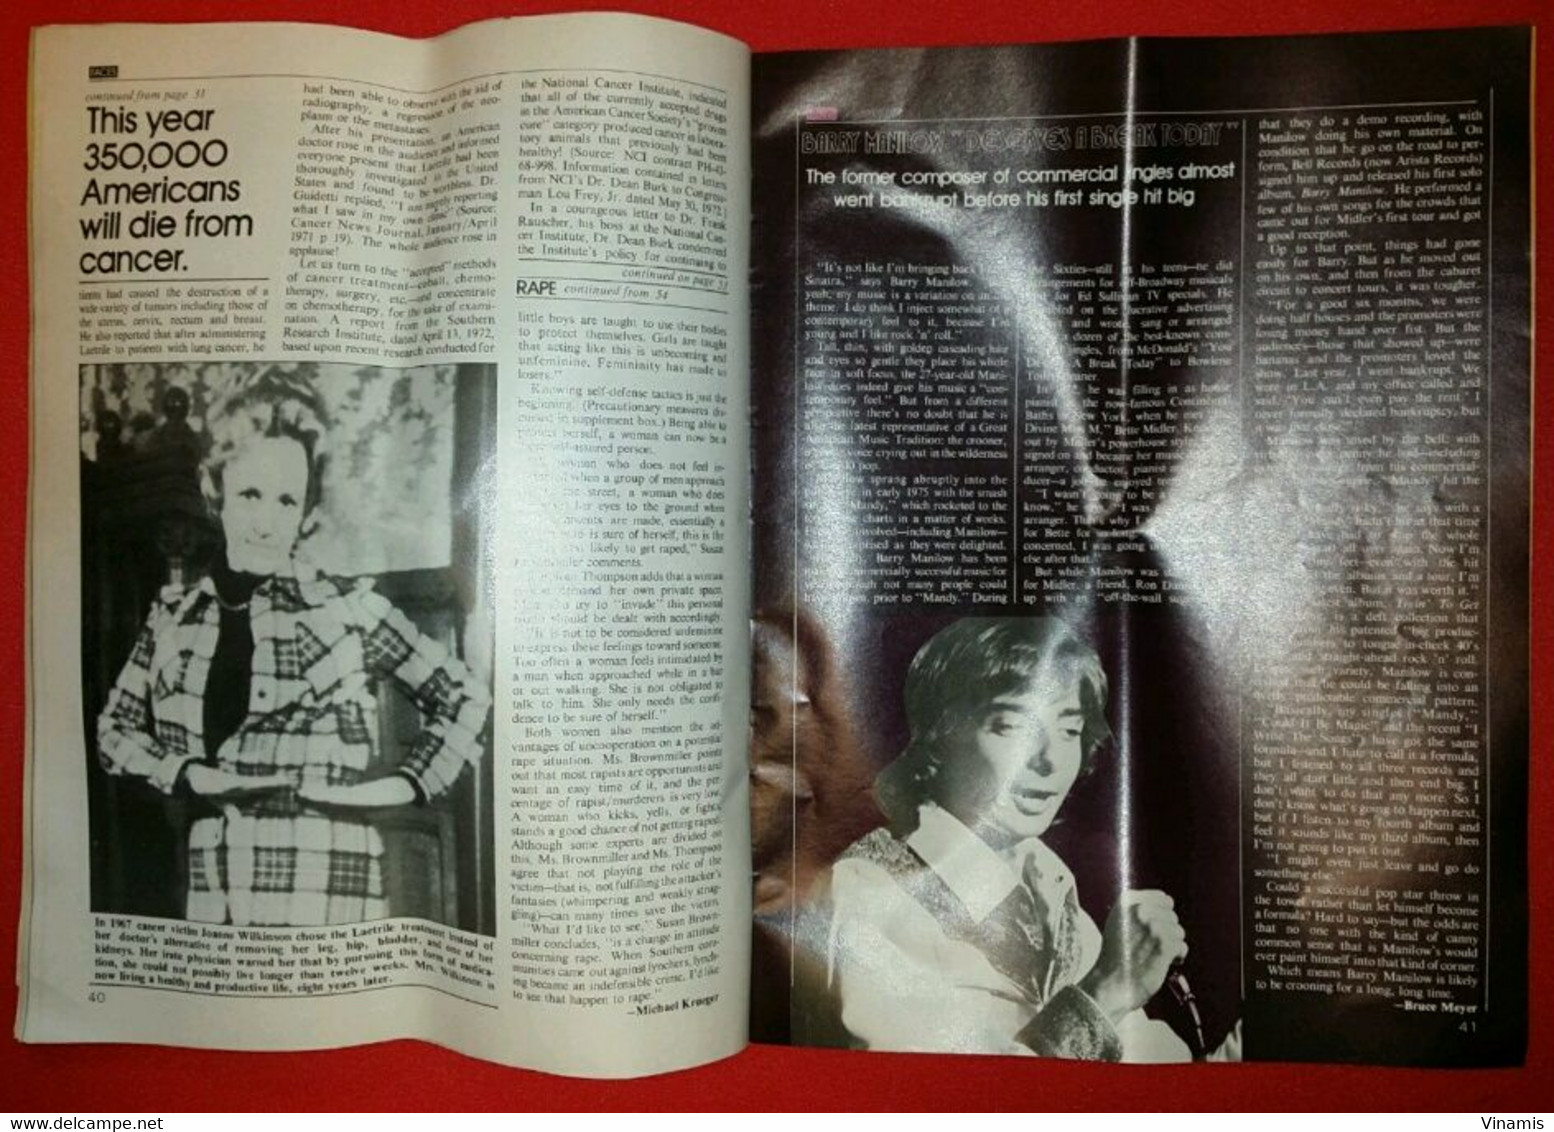 FACES Magazine - Robert REDFORD - His New Image - June 1976 - (en anglais)